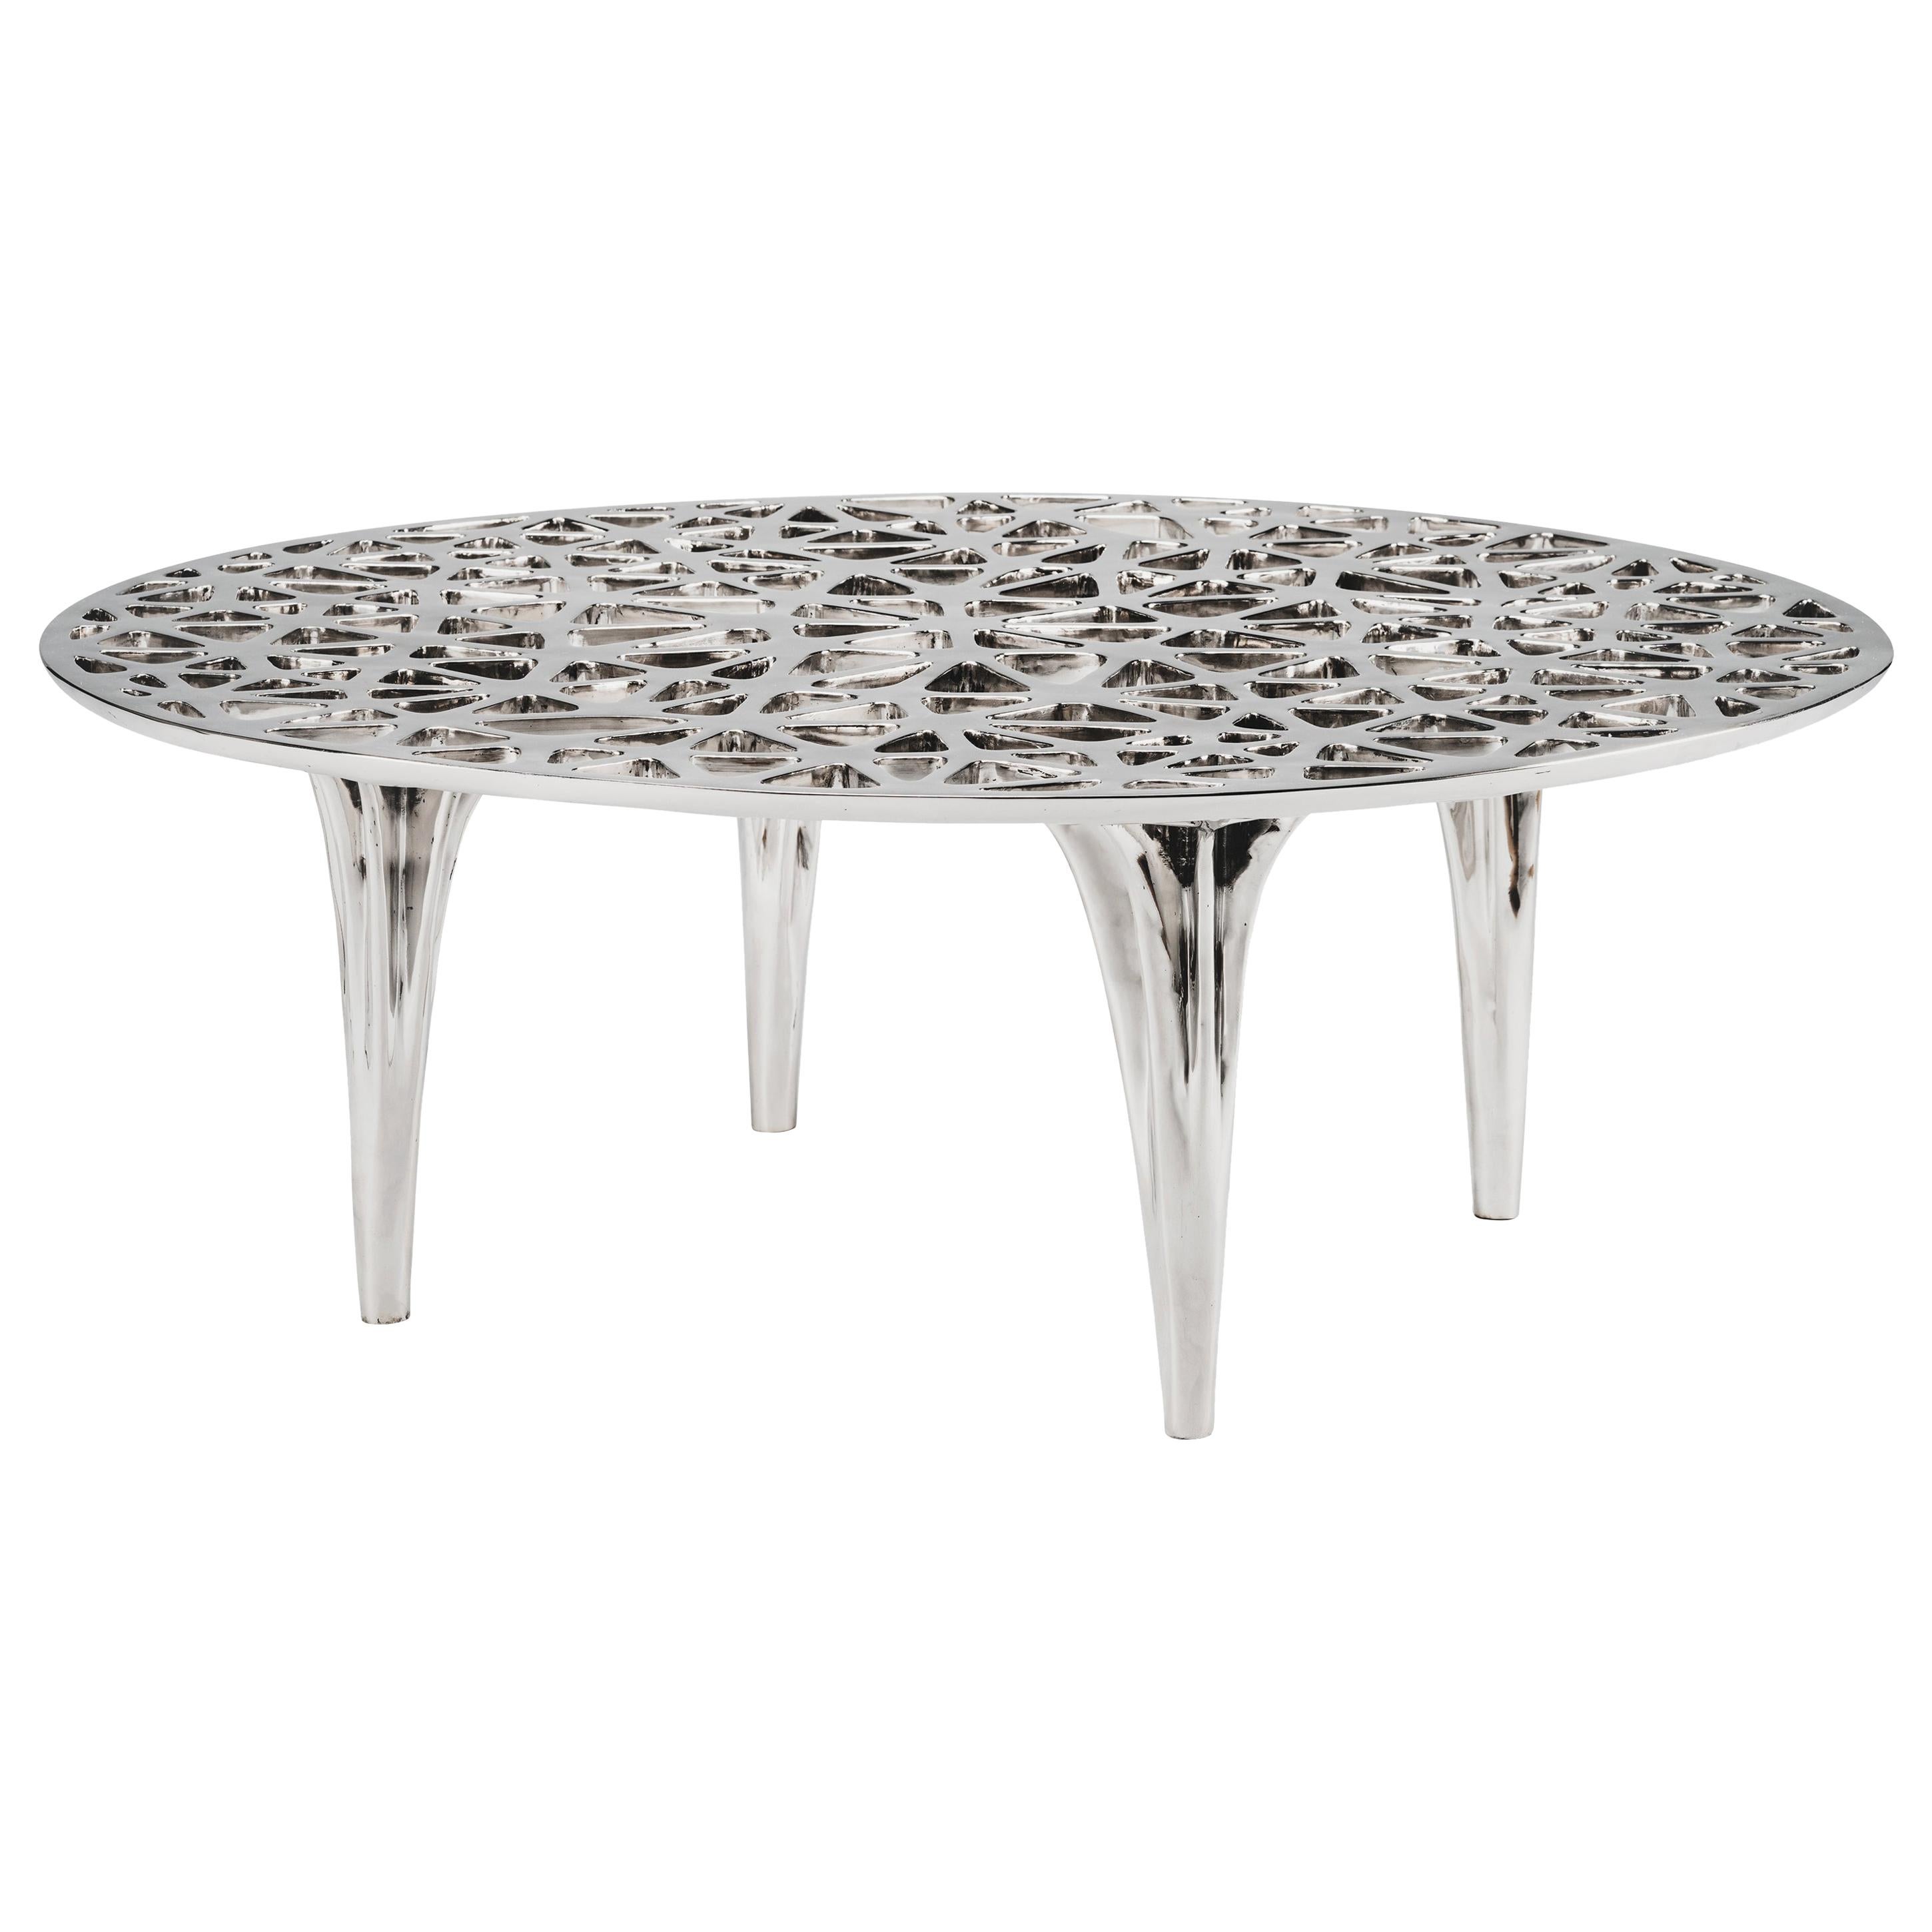 Sedona Stainless Steel Round Coffee Table by Janne Kyttanen